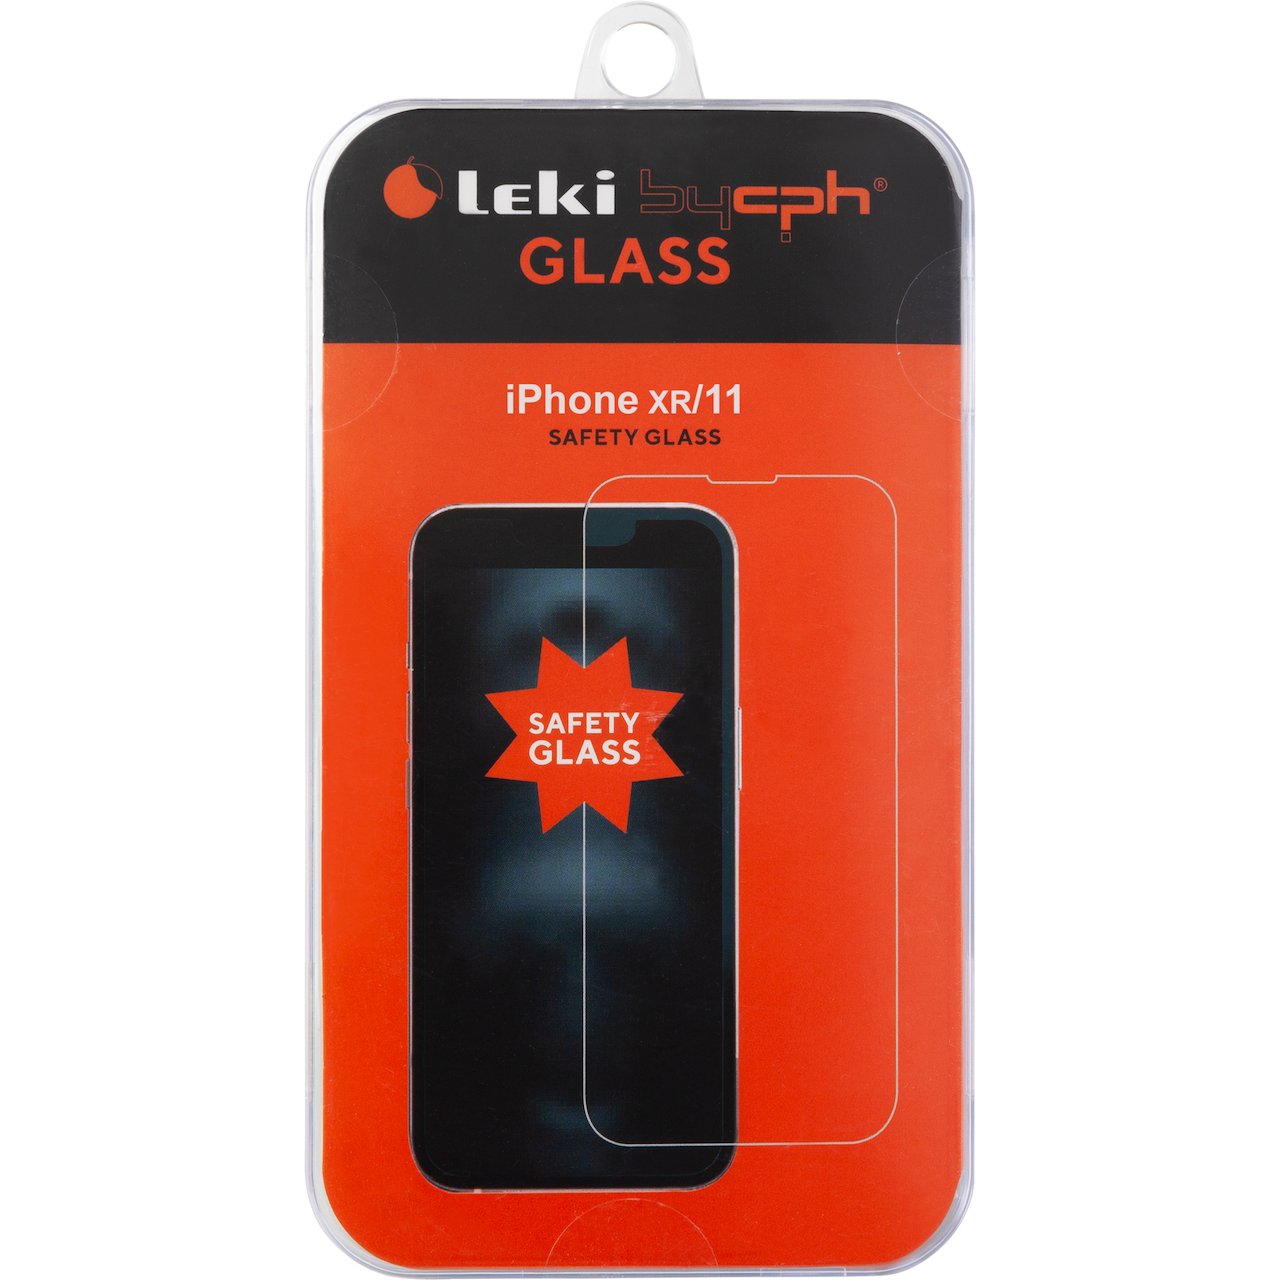 LEKI BYCPH GLASS TIL IPHONE XR/11